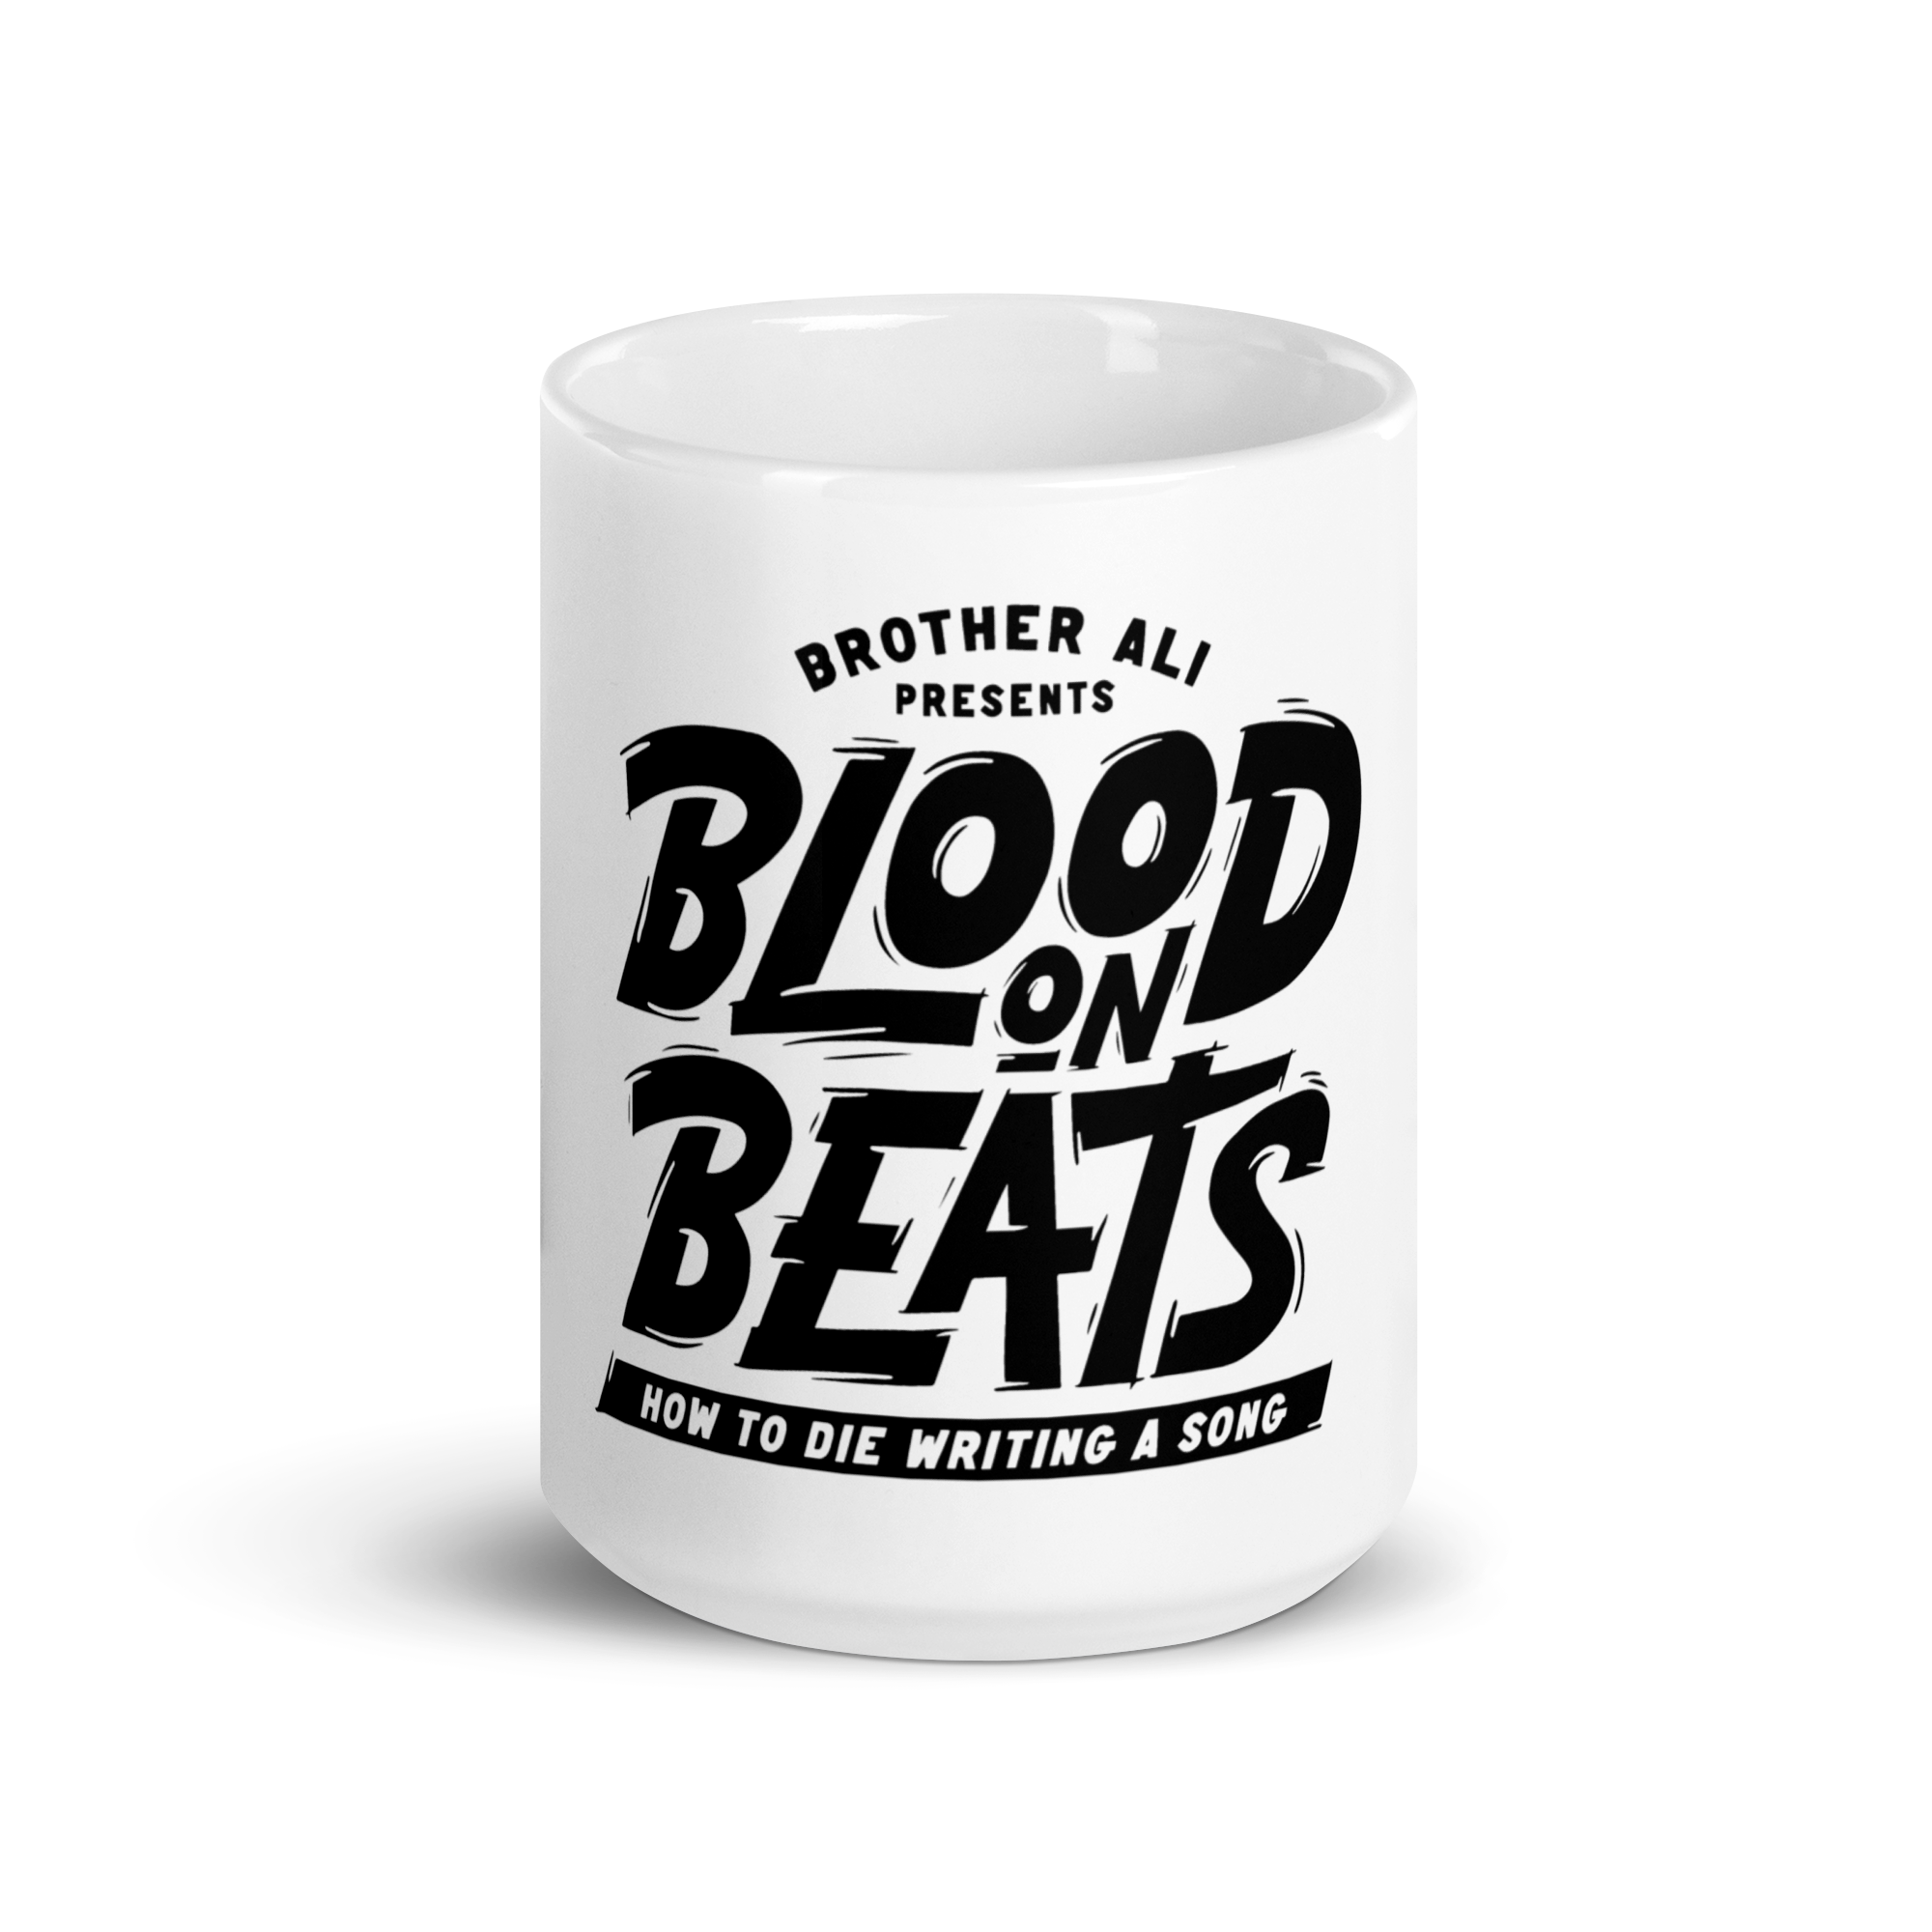 "Blood On Beats" Ceramic Mug